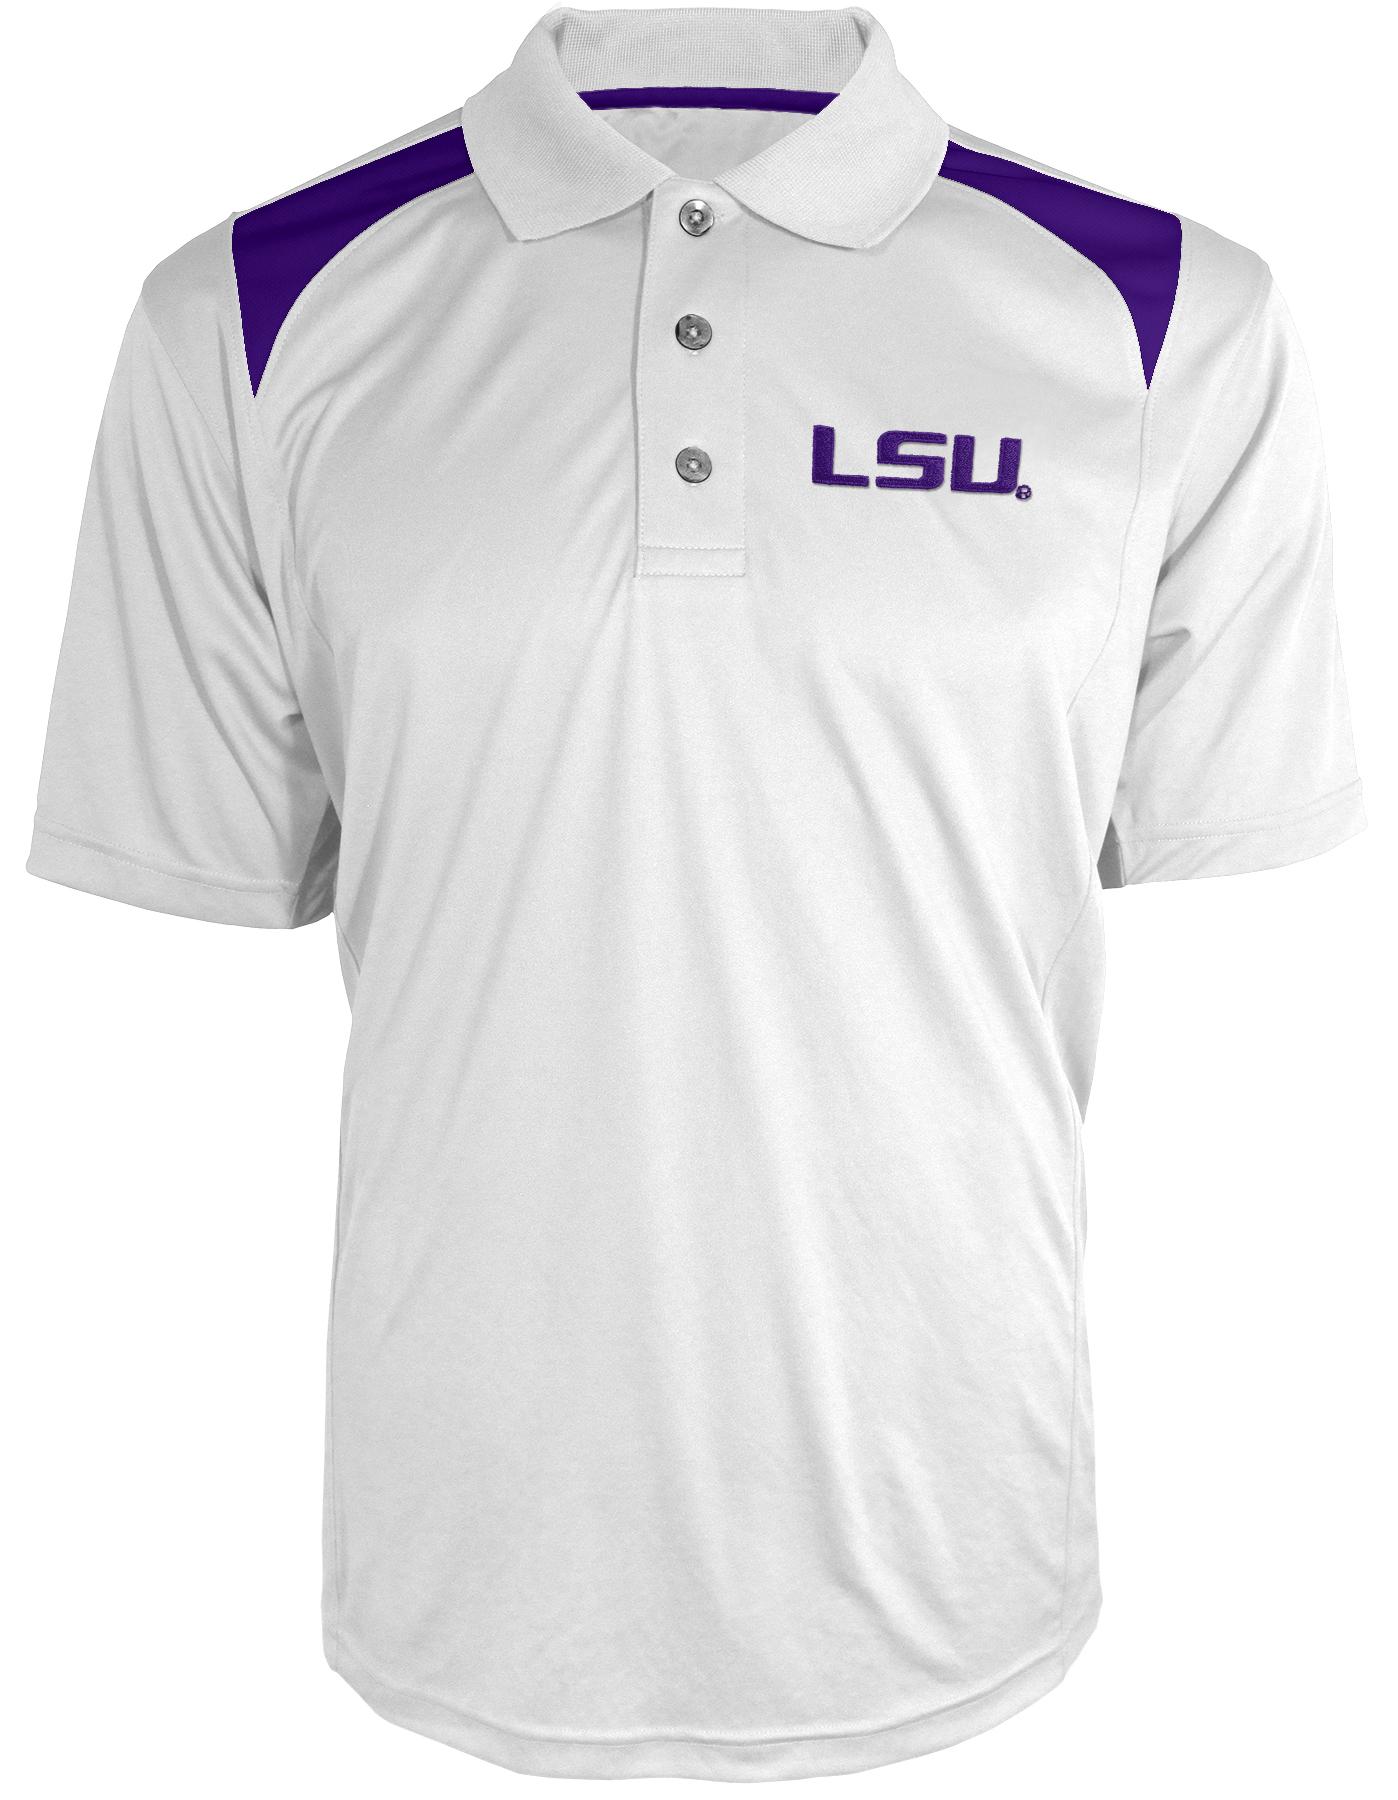 NCAA Men's Polo Shirt - Louisiana State University